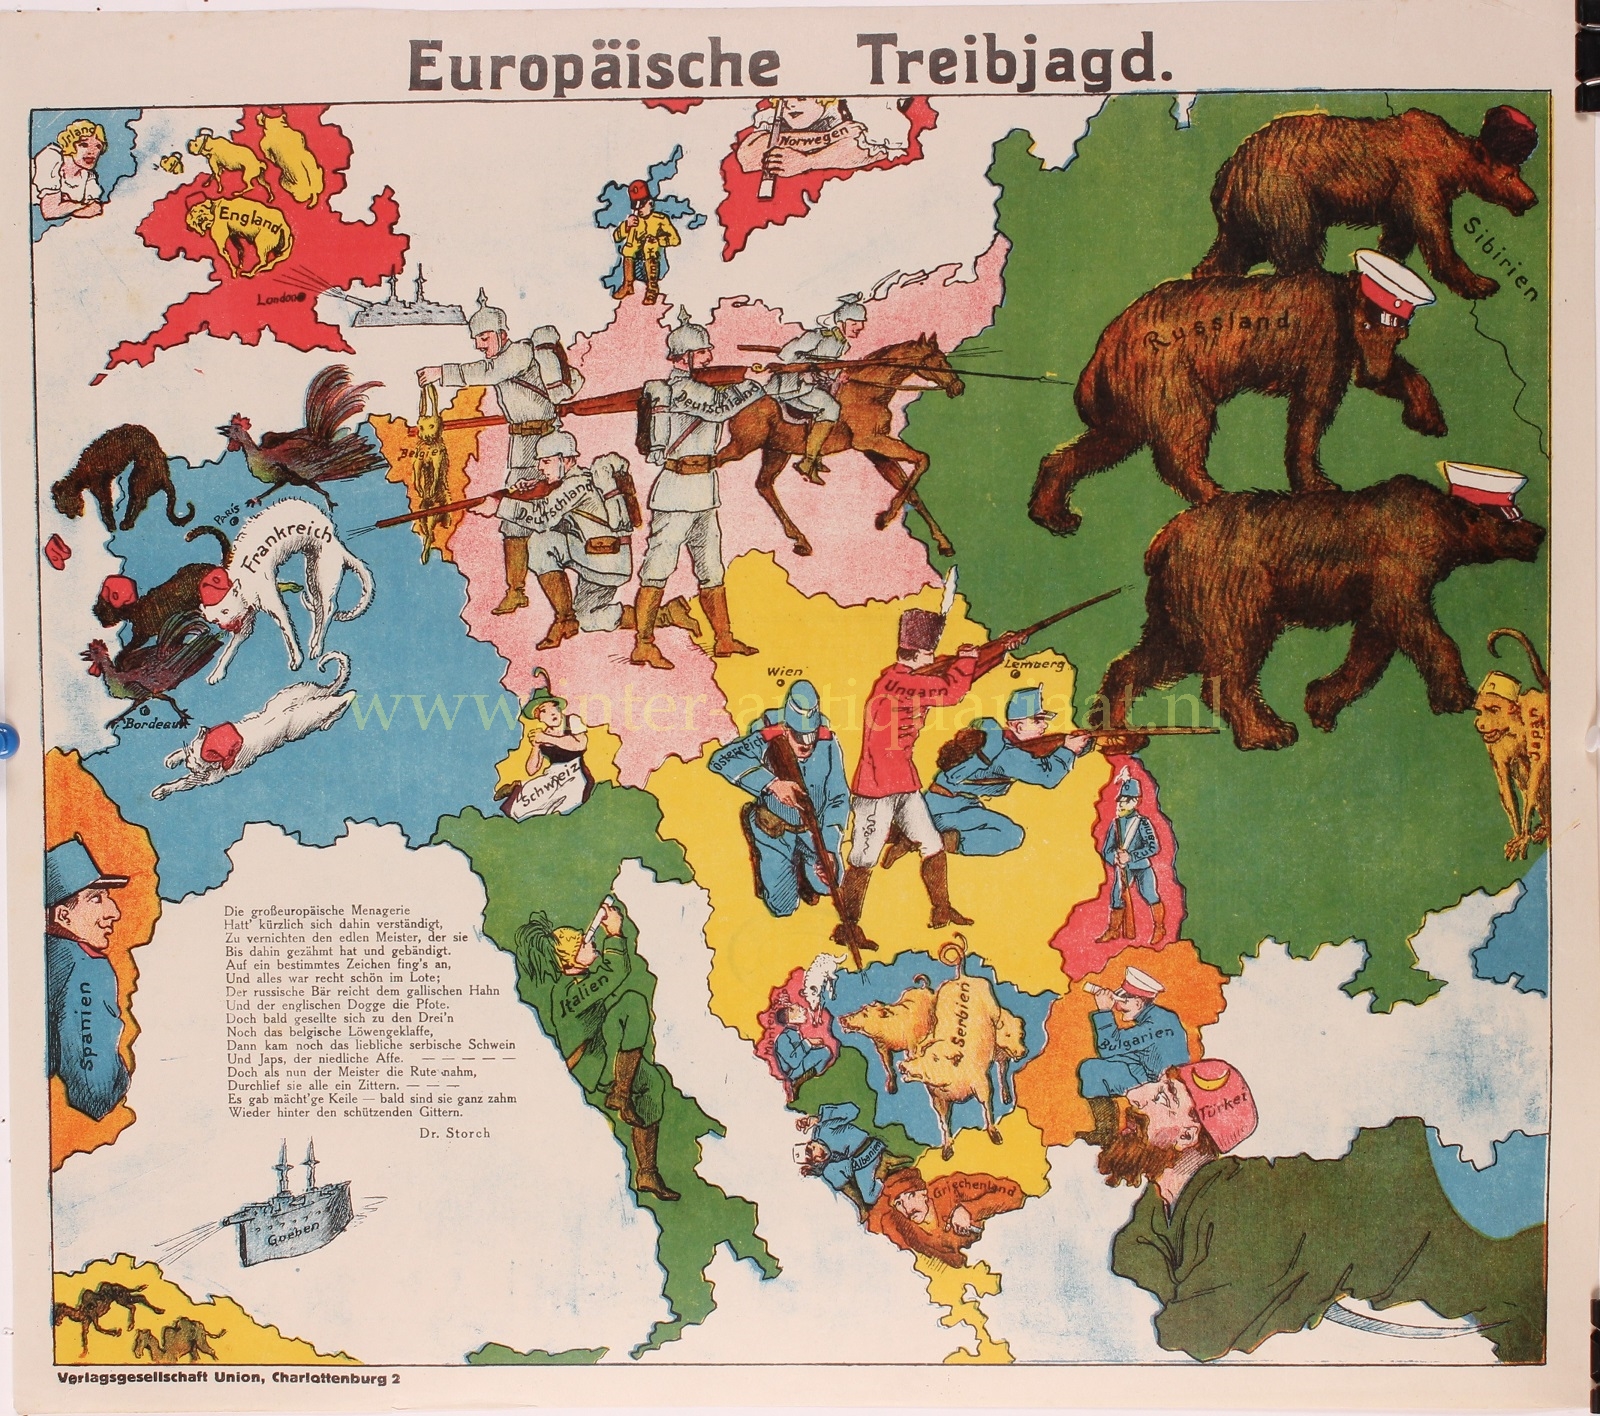  - Cartoon map of Europe - Verlagsgesellschaft Union, 1914